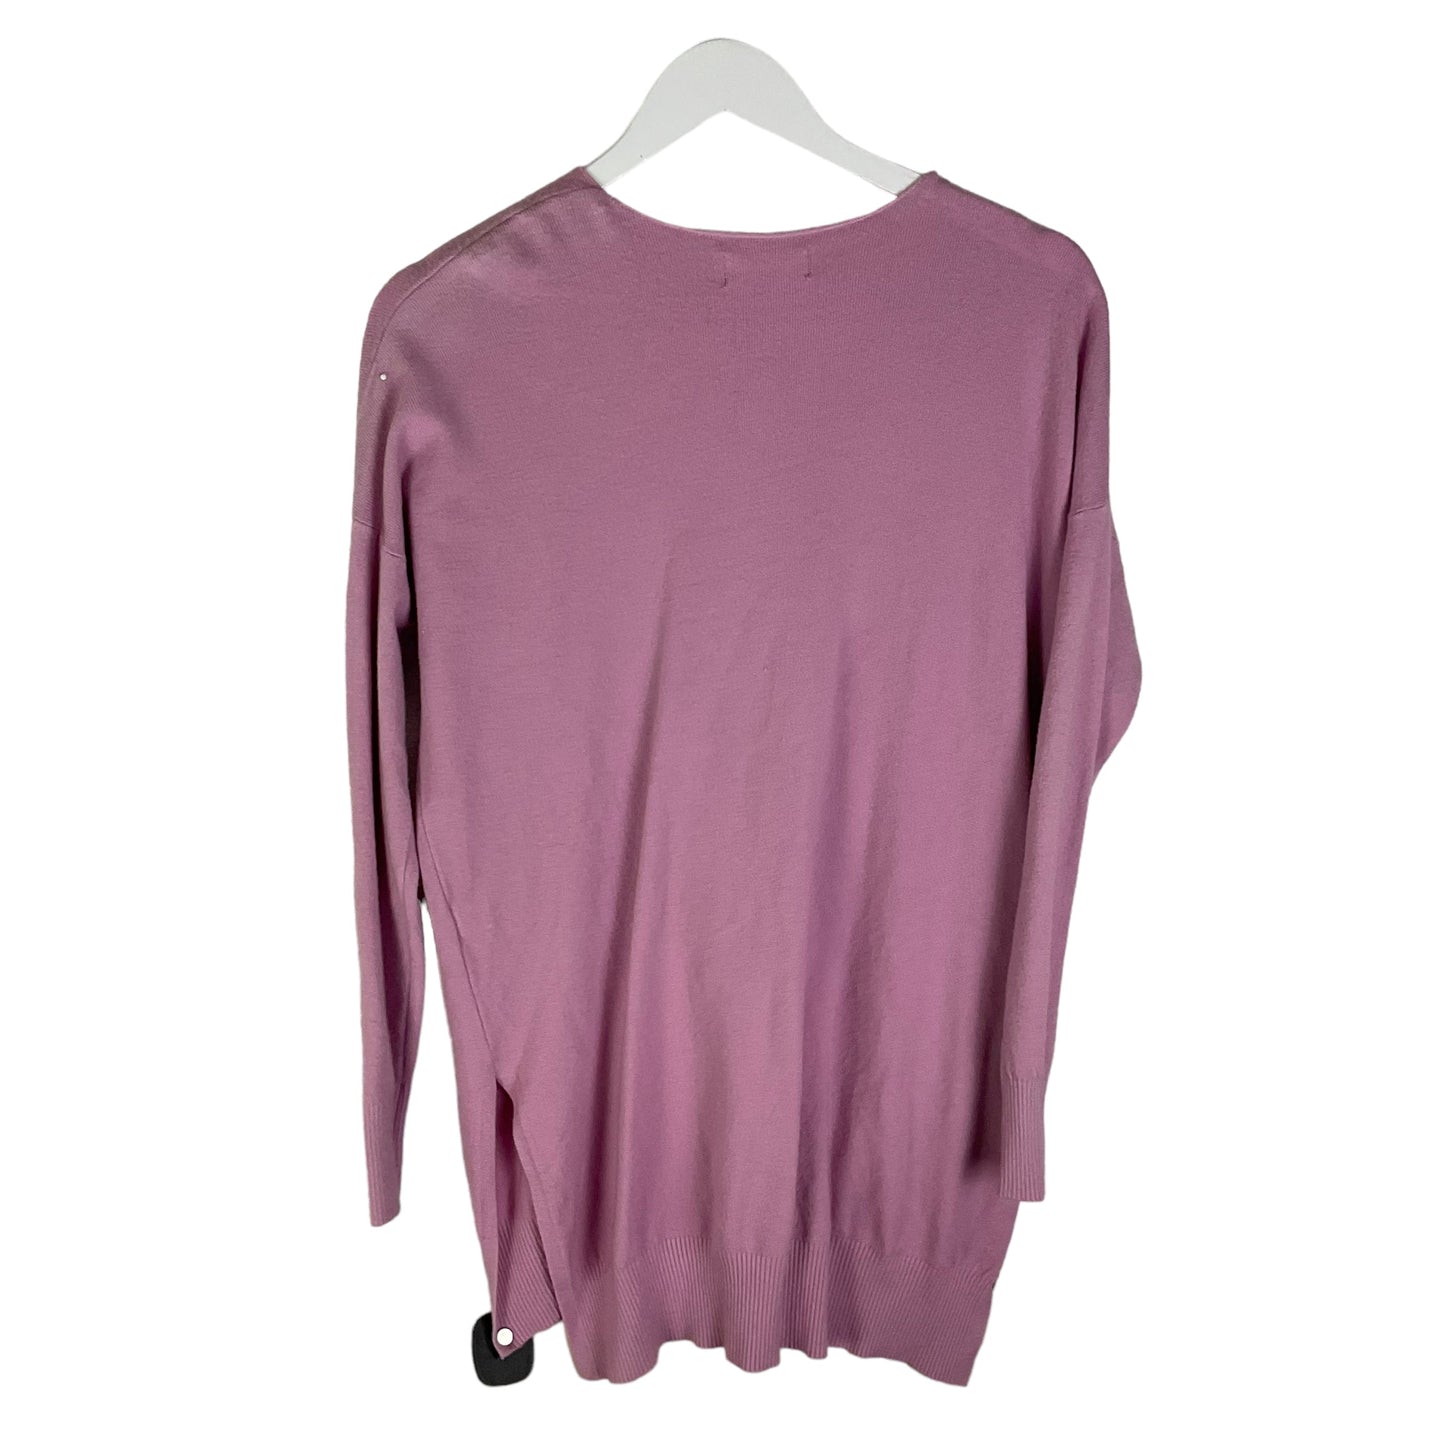 Sweater By Zenana Outfitters  Size: Xs